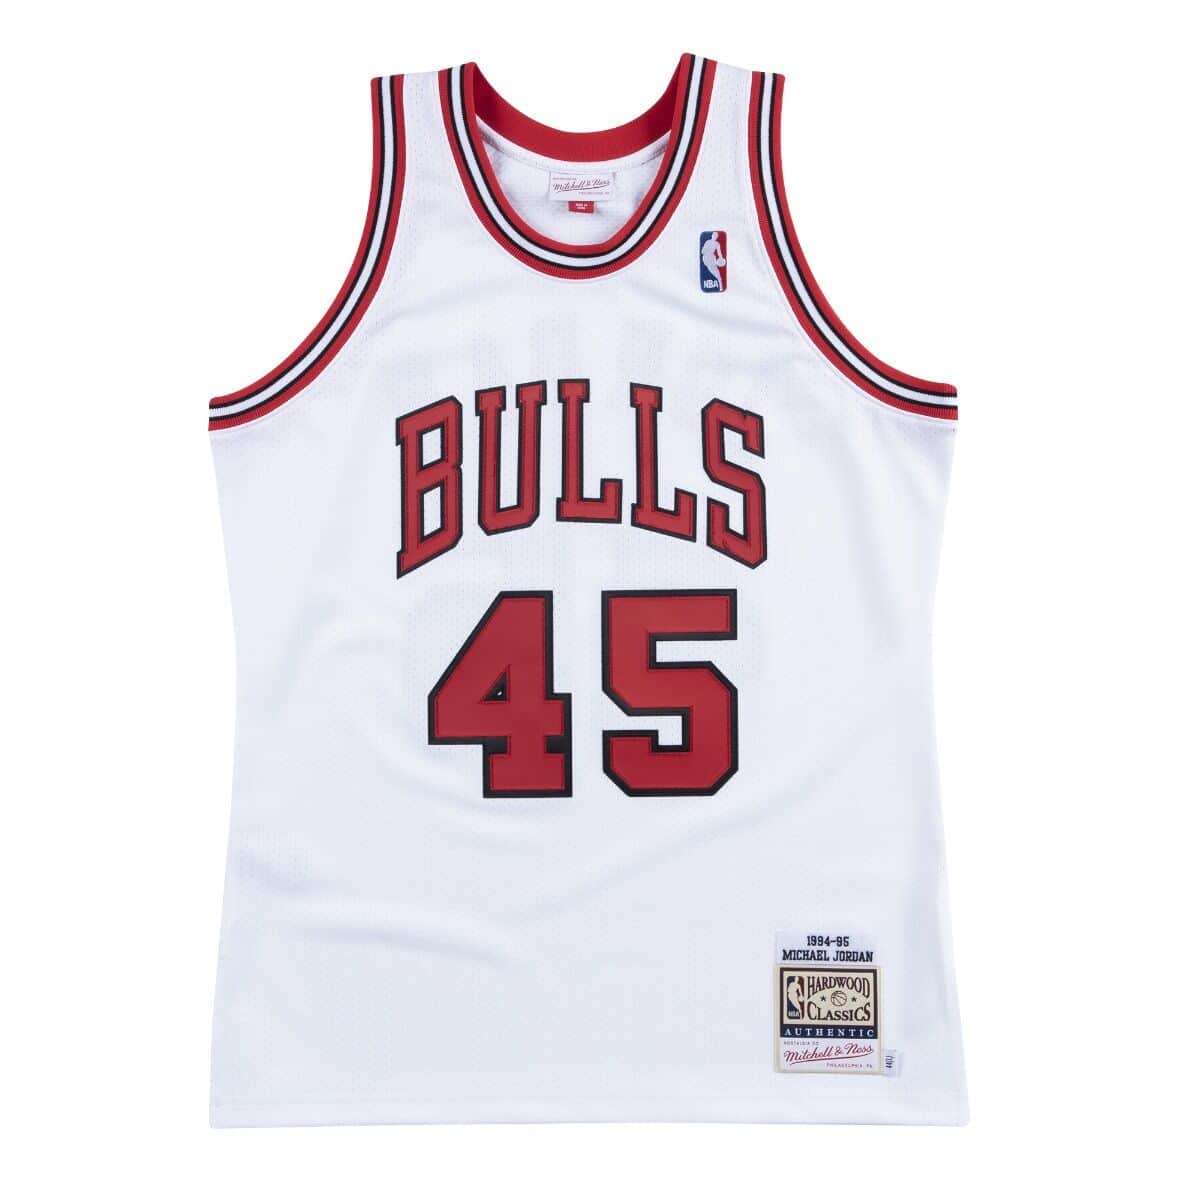 Off-White Nike Jordan The End Chicago Bulls Authentic NBA Tribute